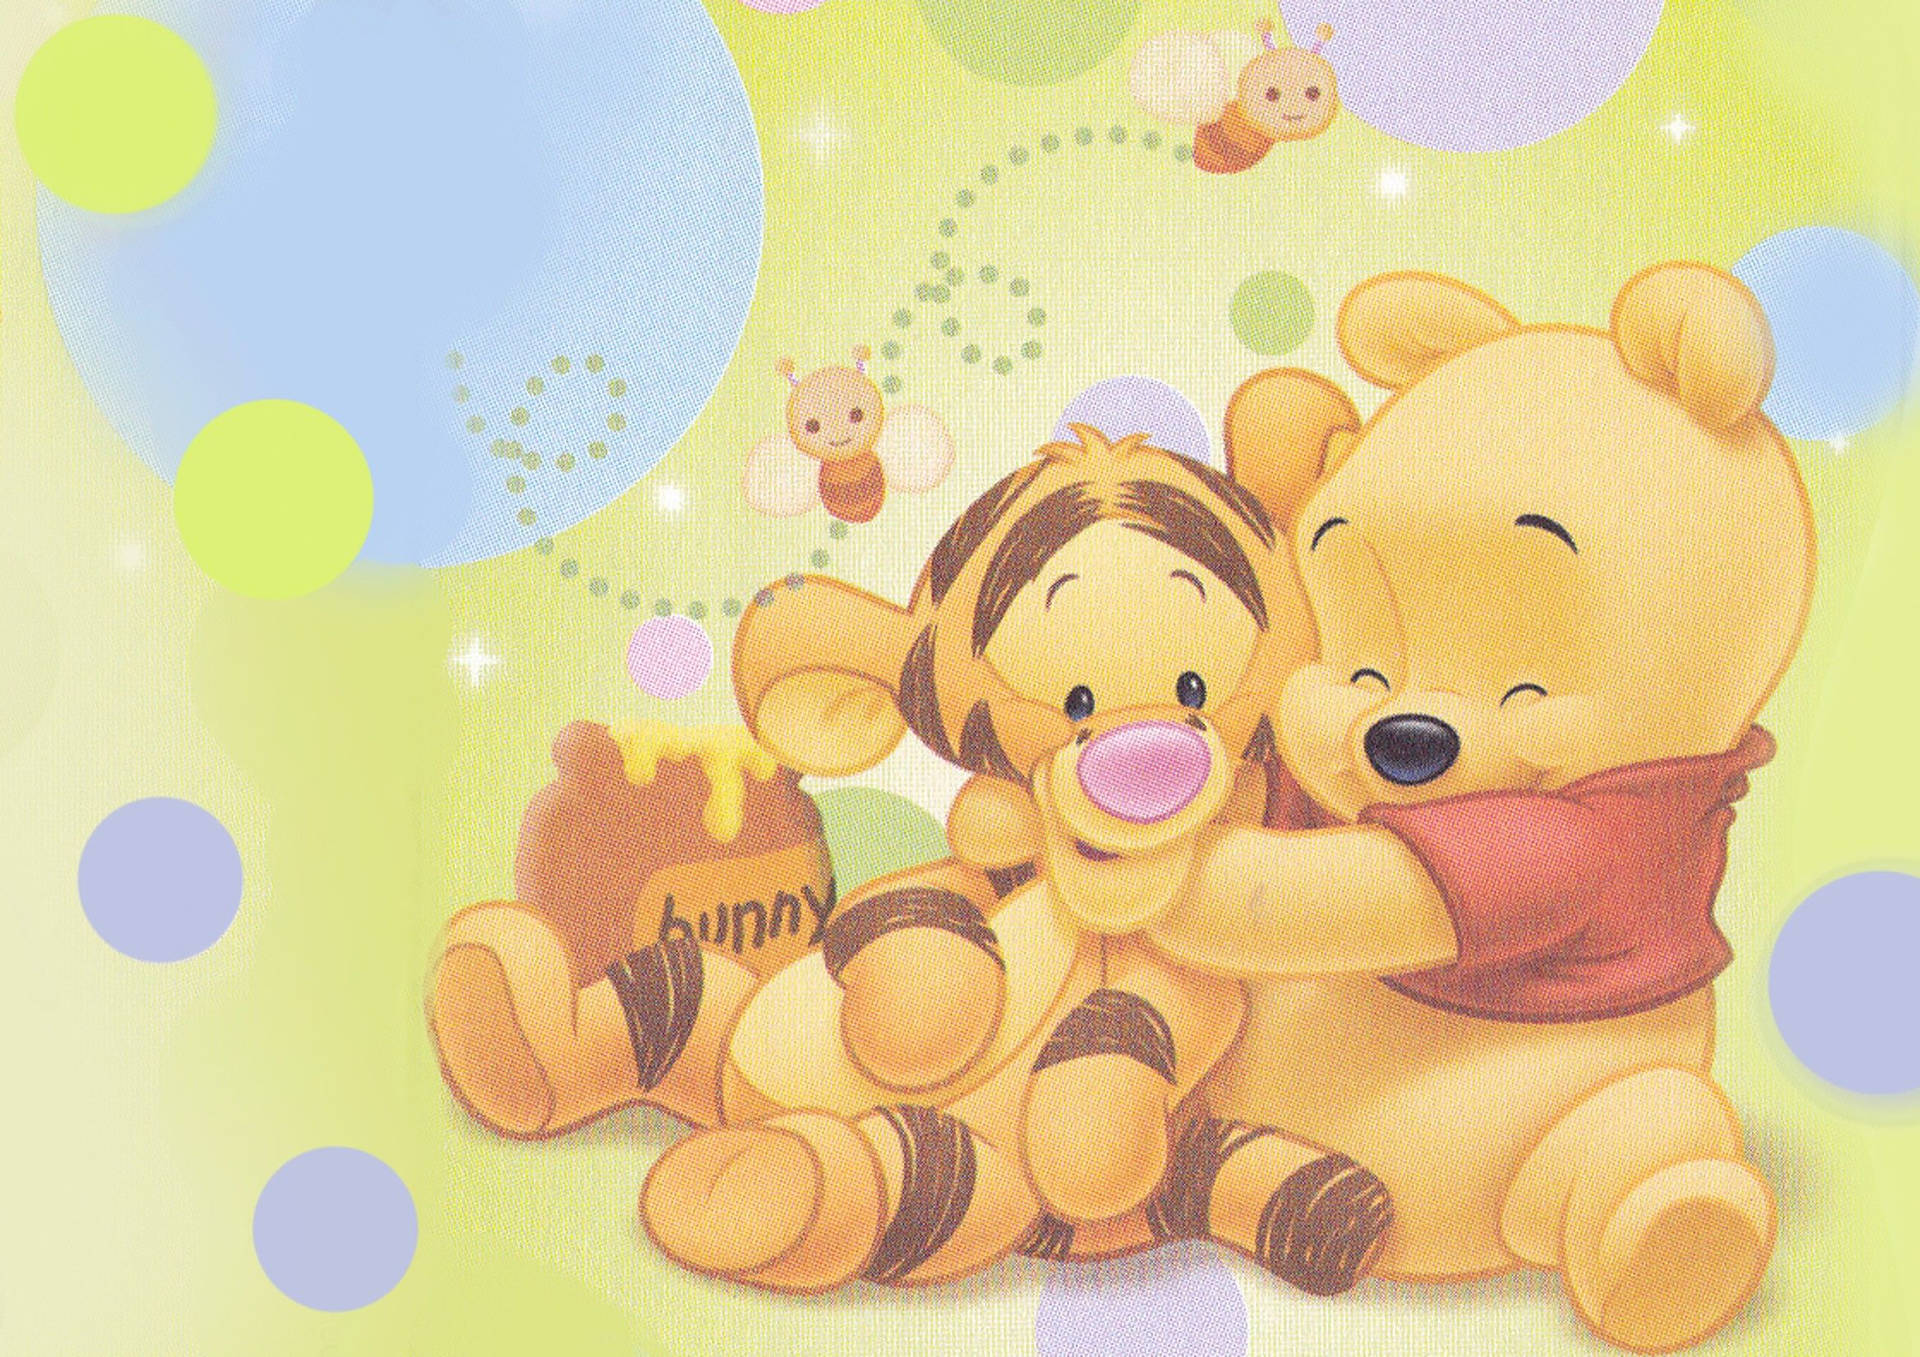 “Tigger and Winnie The Pooh Having Fun in a Polka Dot World” Wallpaper